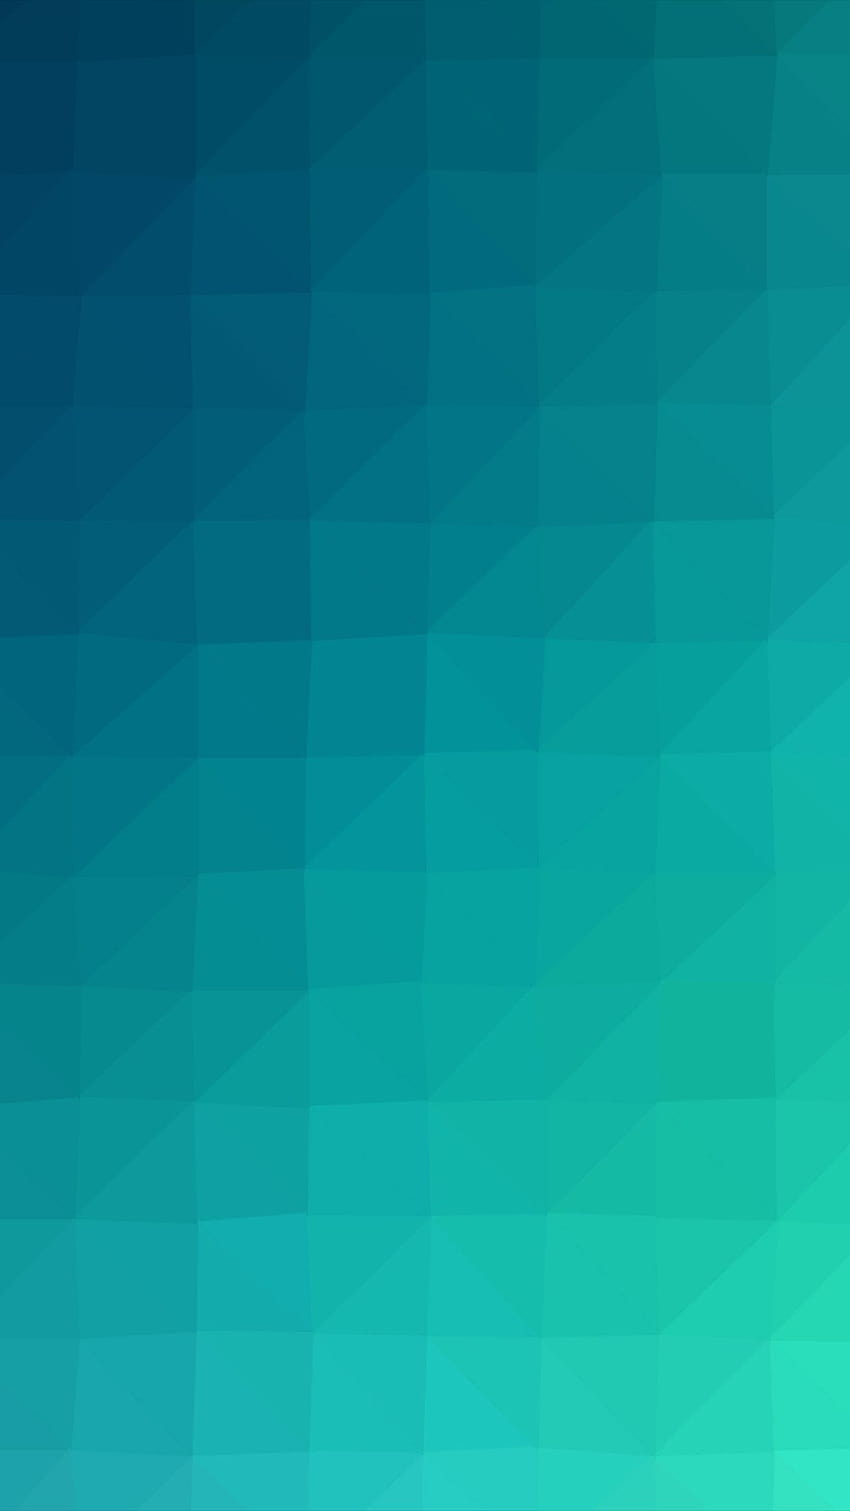 Azul verde polígono arte abstracto patrón Android, polígono android fondo de pantalla del teléfono